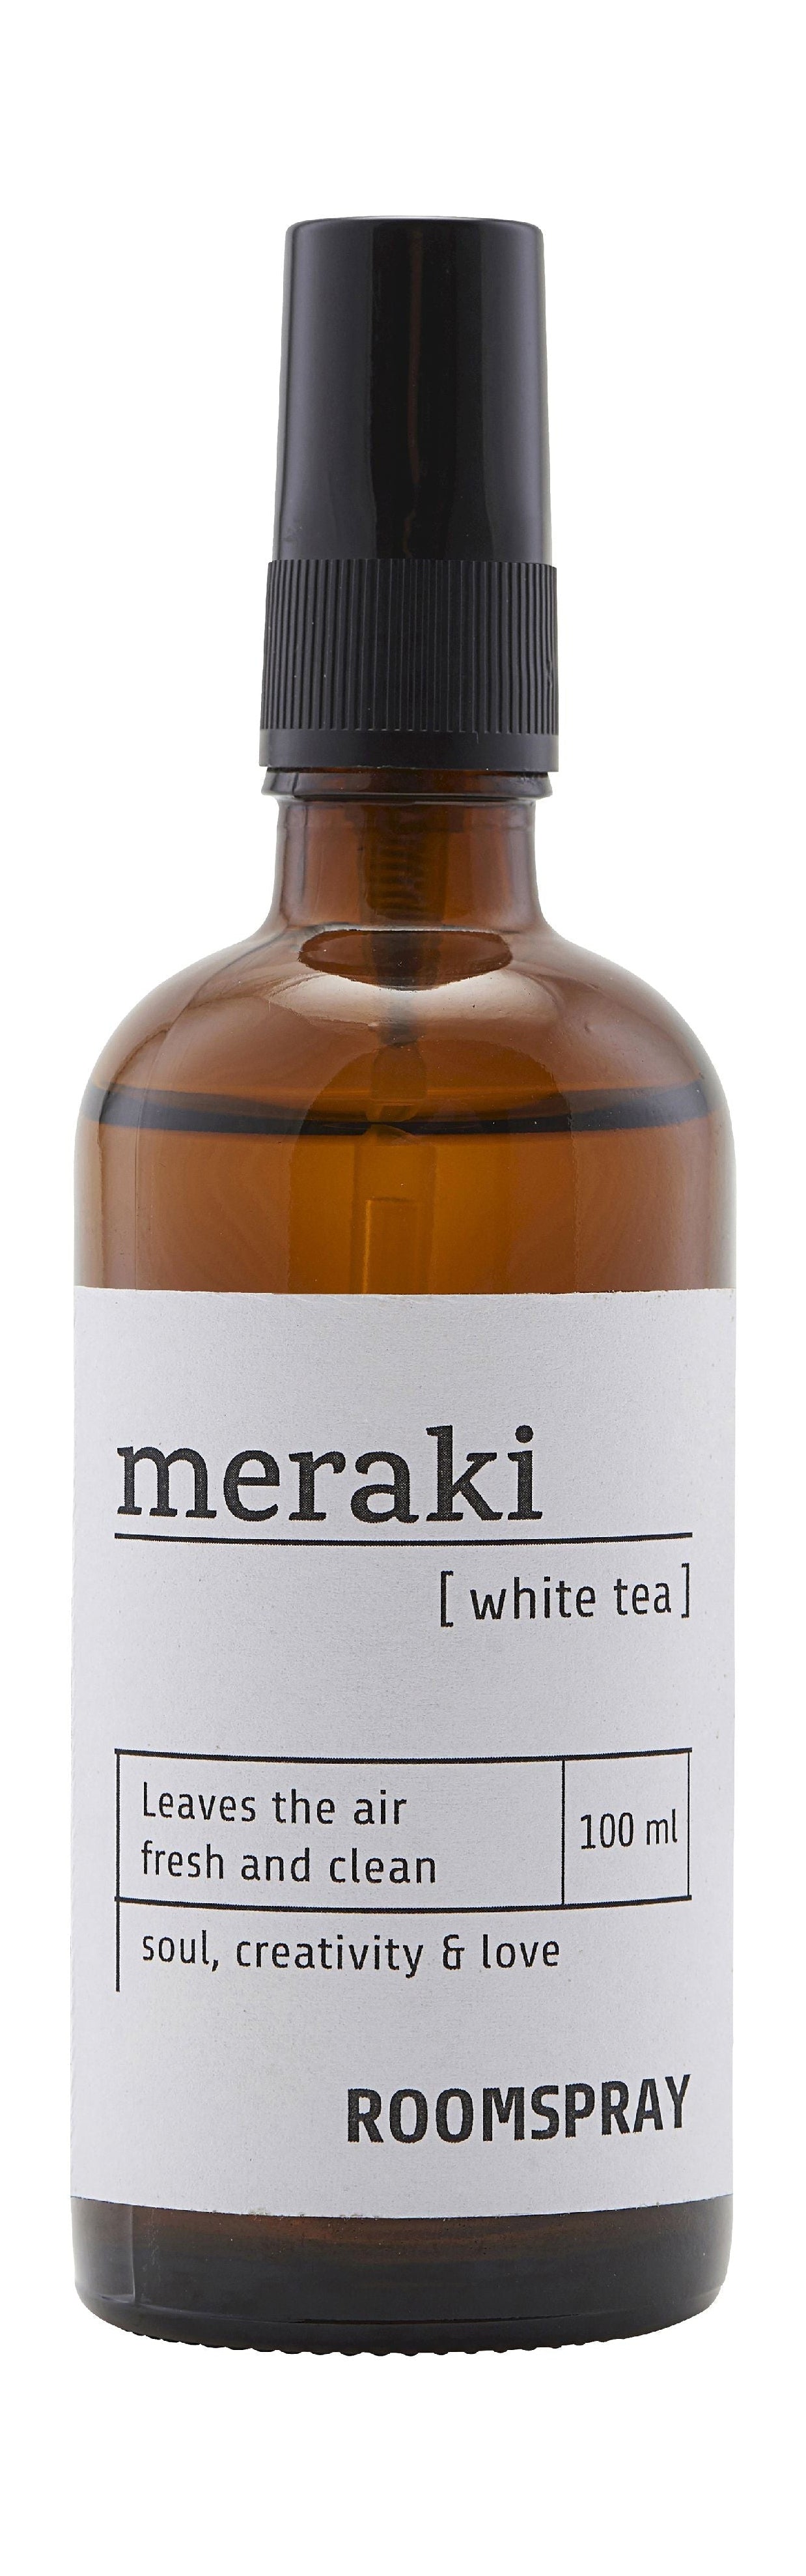 Meraki Spray de chambre 100 ml, thé blanc